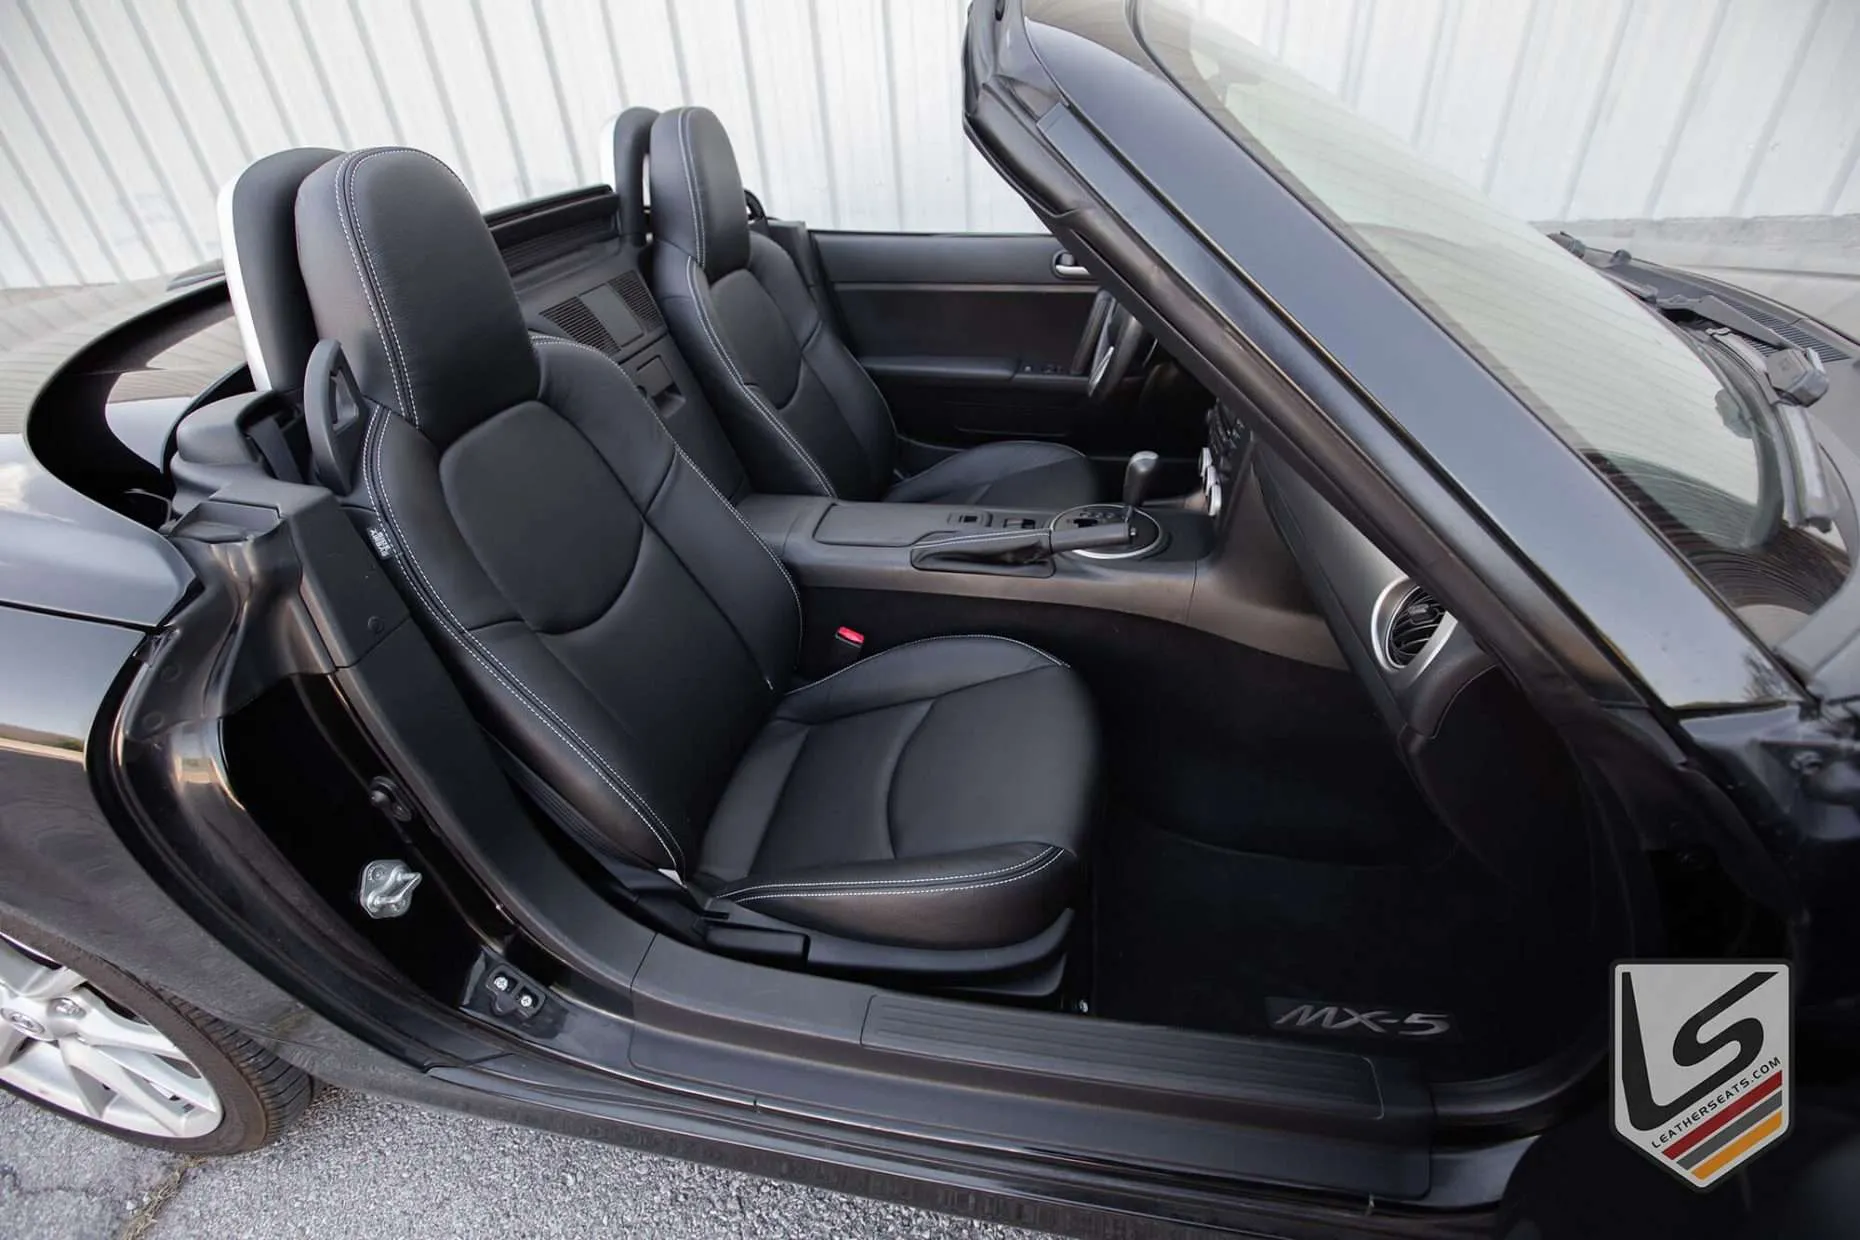 Top down view of custom leather interior for Mazda Miata